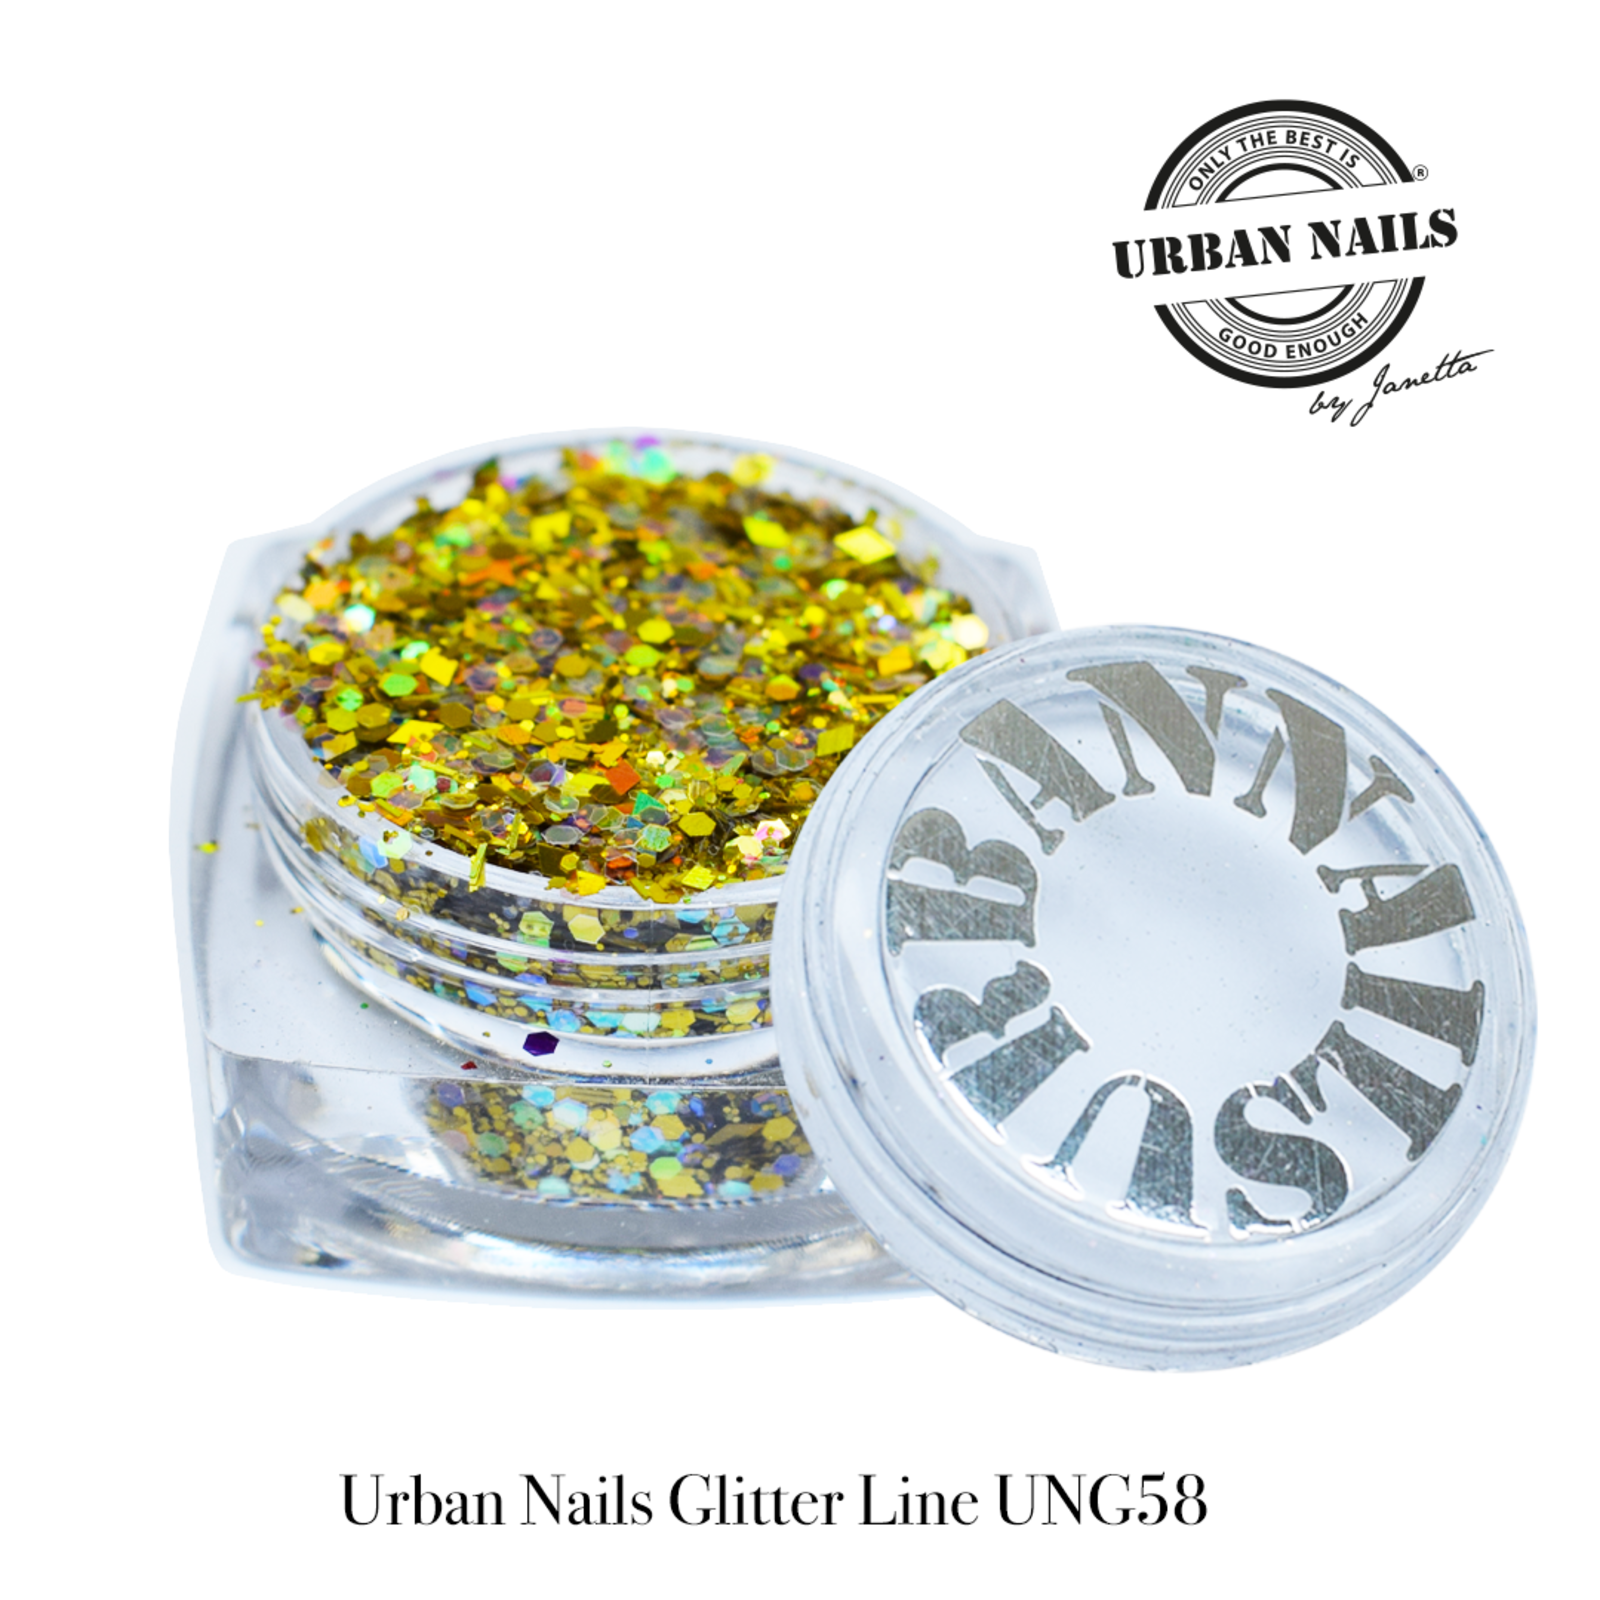 Urban nails Glitter Line UNG58